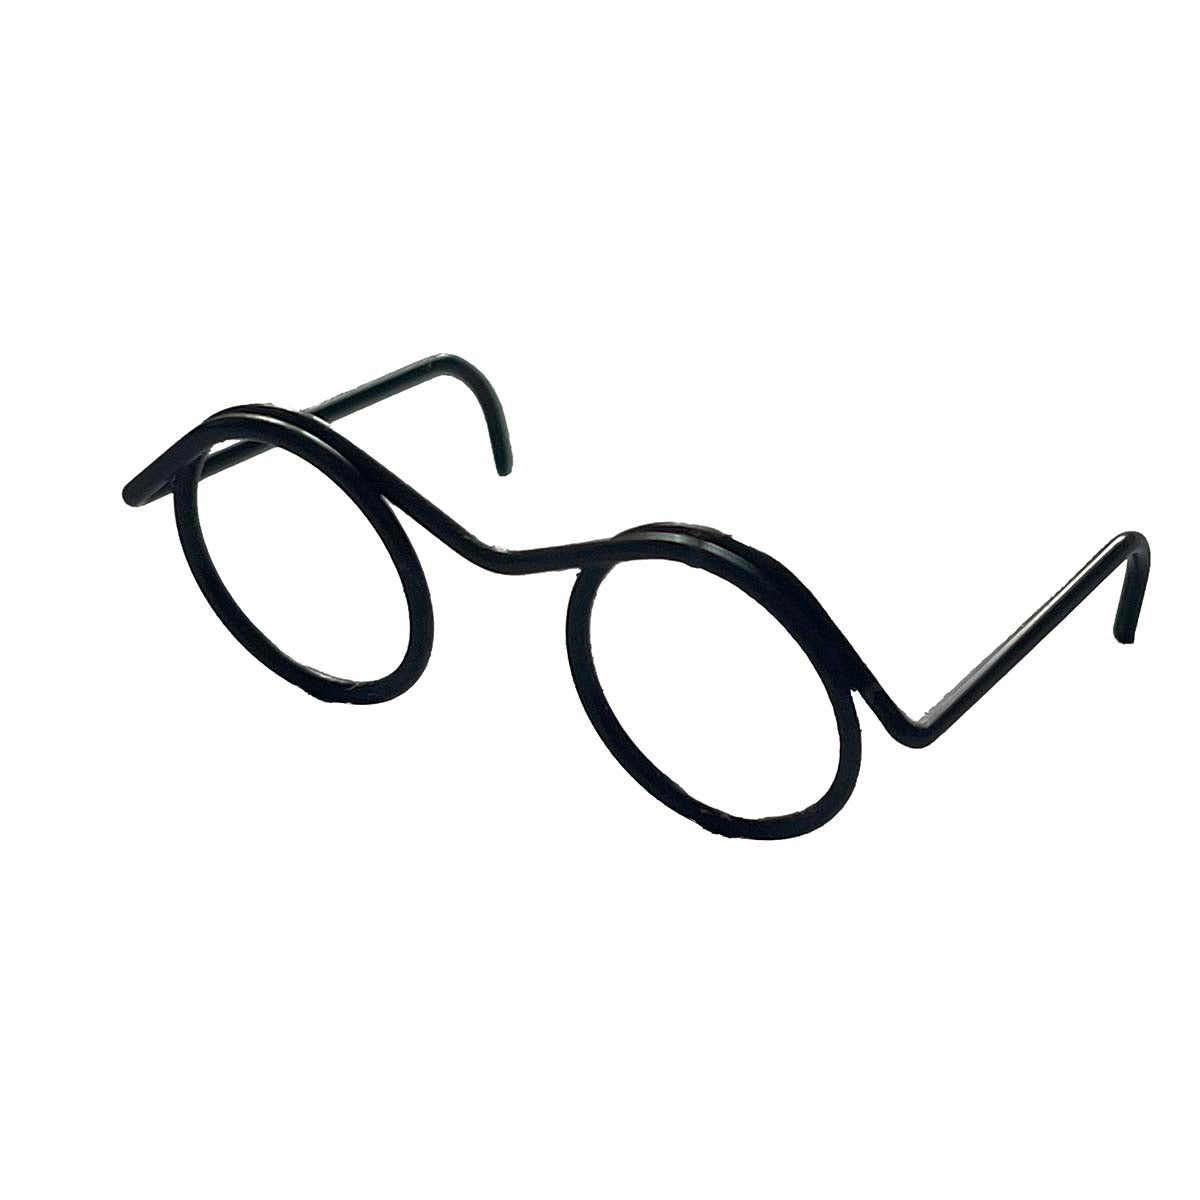 Spectacles Glasses for Needle Felting Black W 32 mm